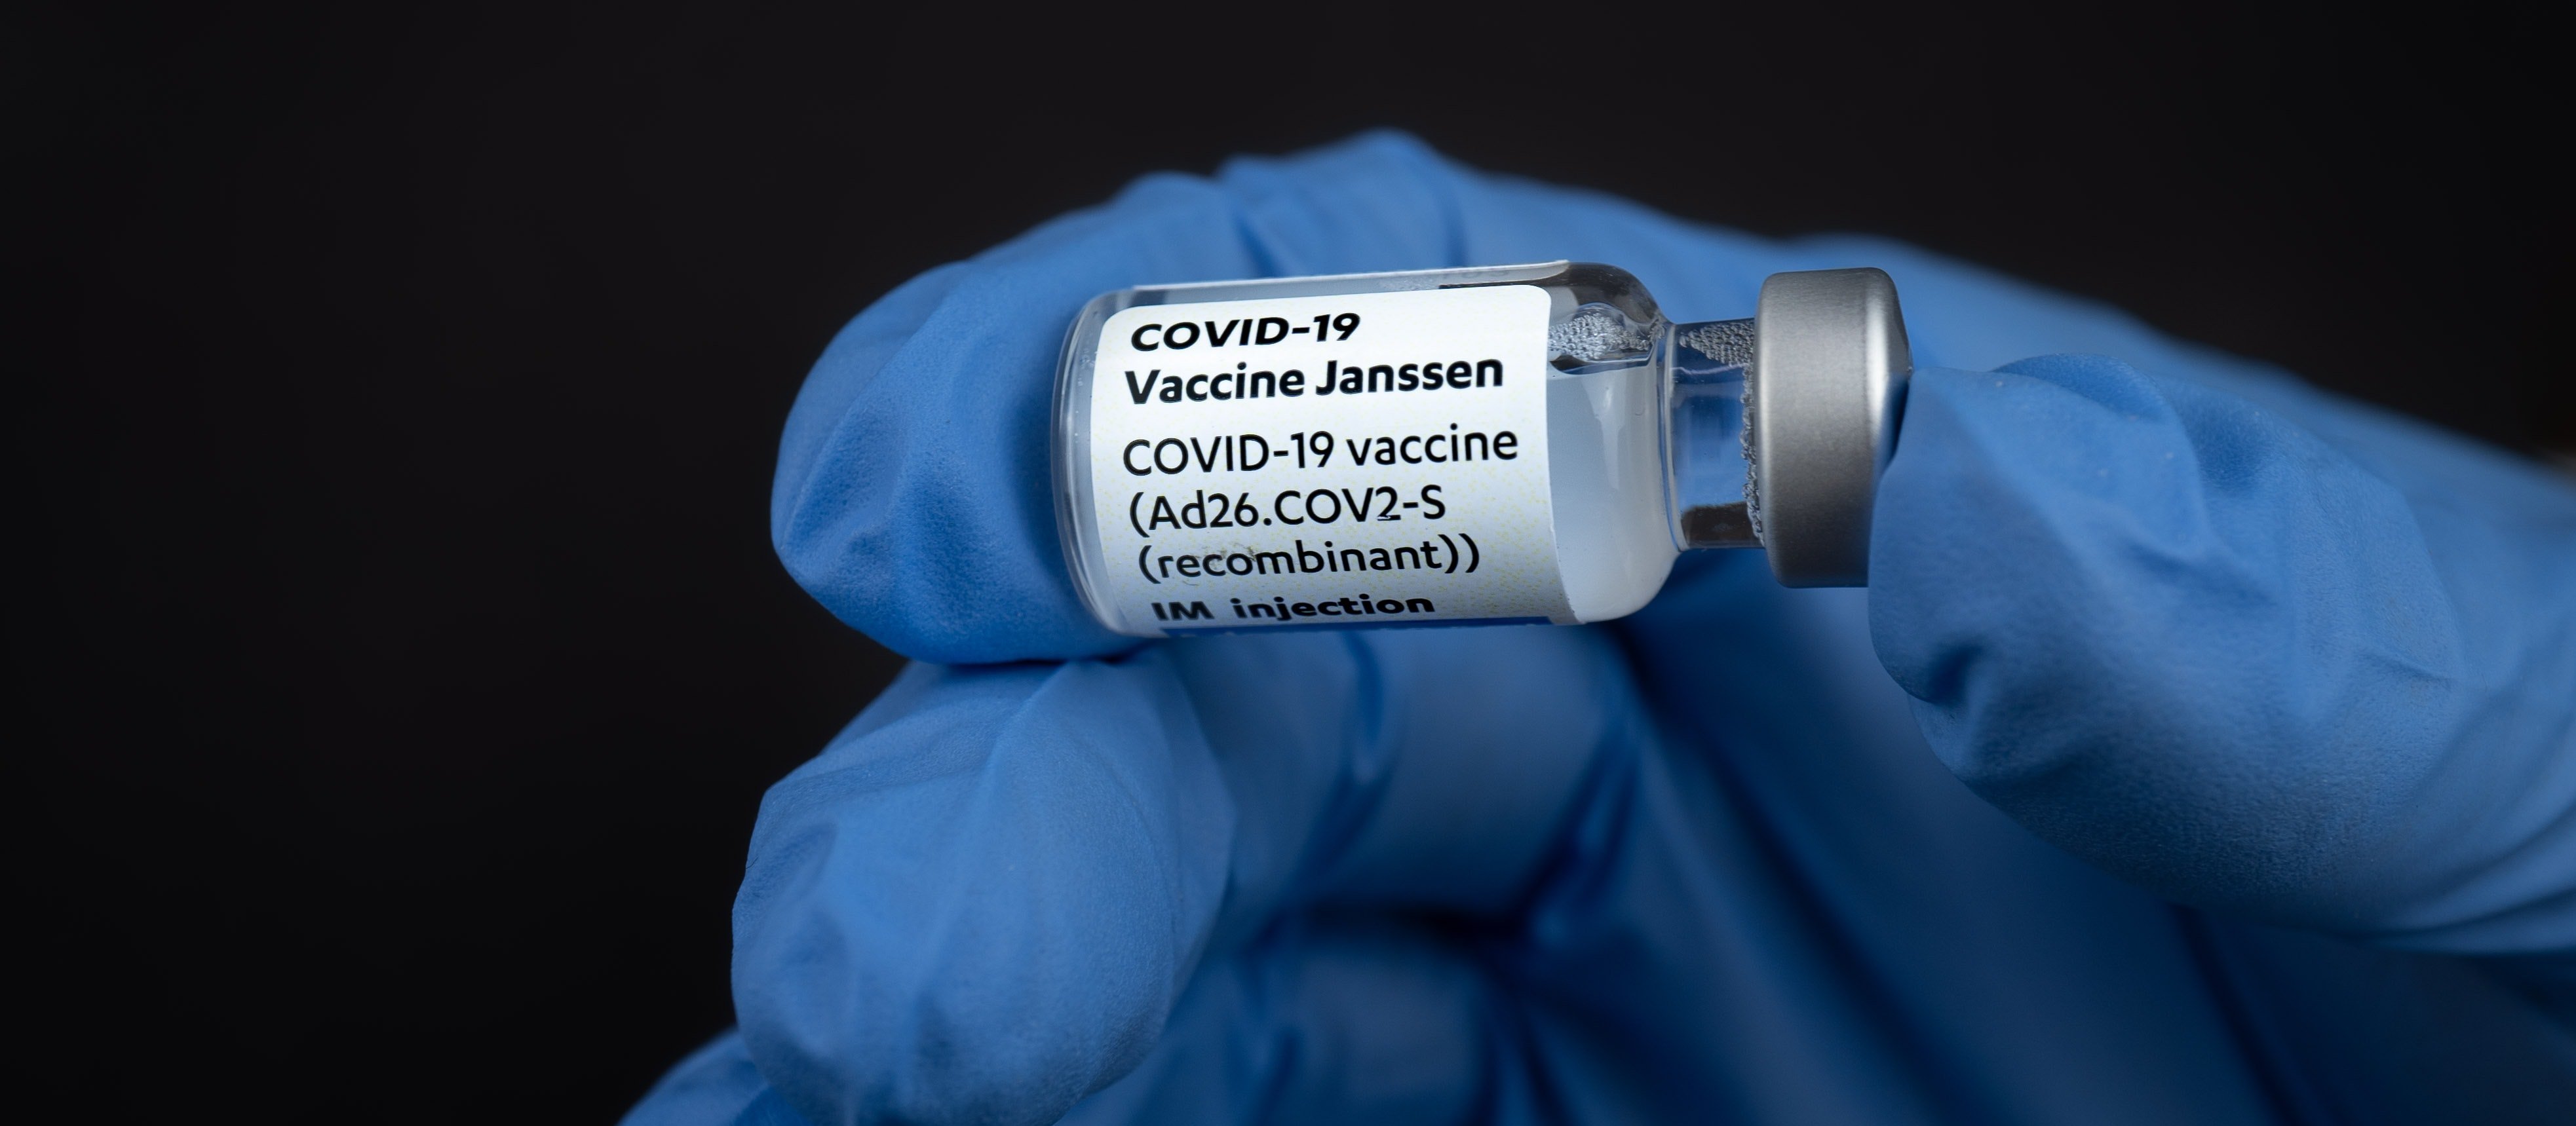 Janssen vaccine. [Image: Mika Baumeister on Unsplash]